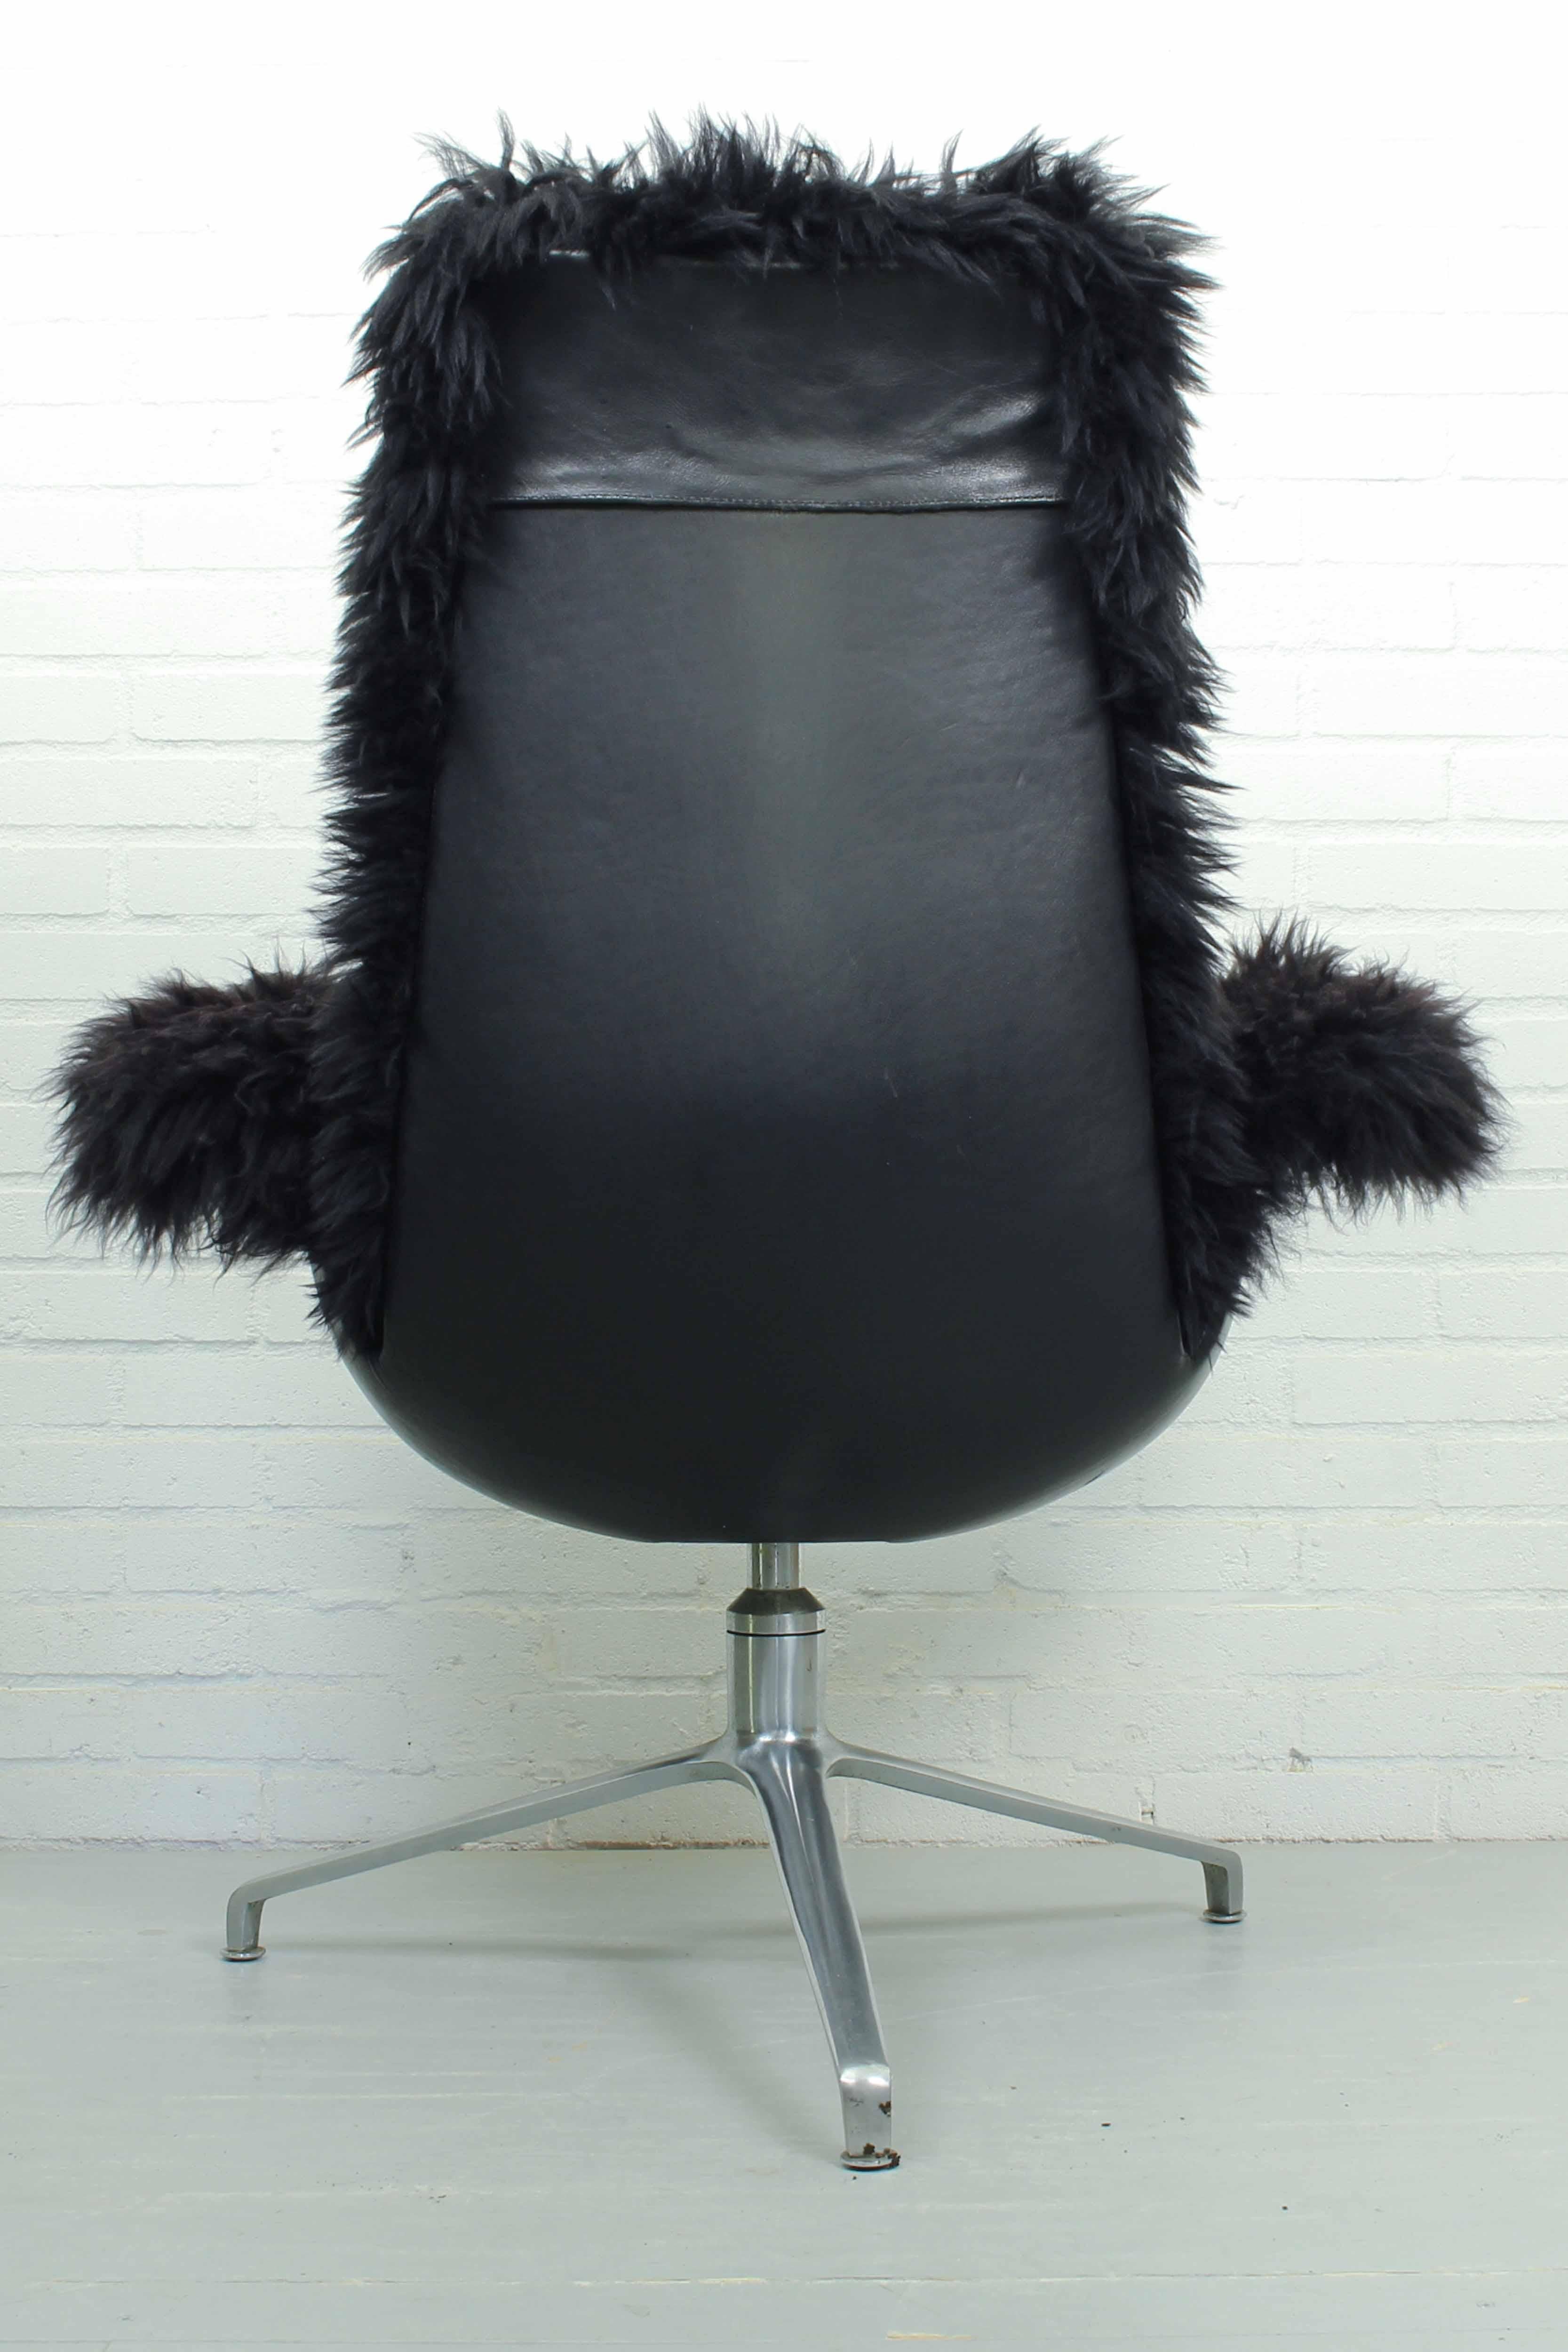 Leather Preben Fabricius Jorgen Kastholm Bird Chairs Kill, 1964 For Sale